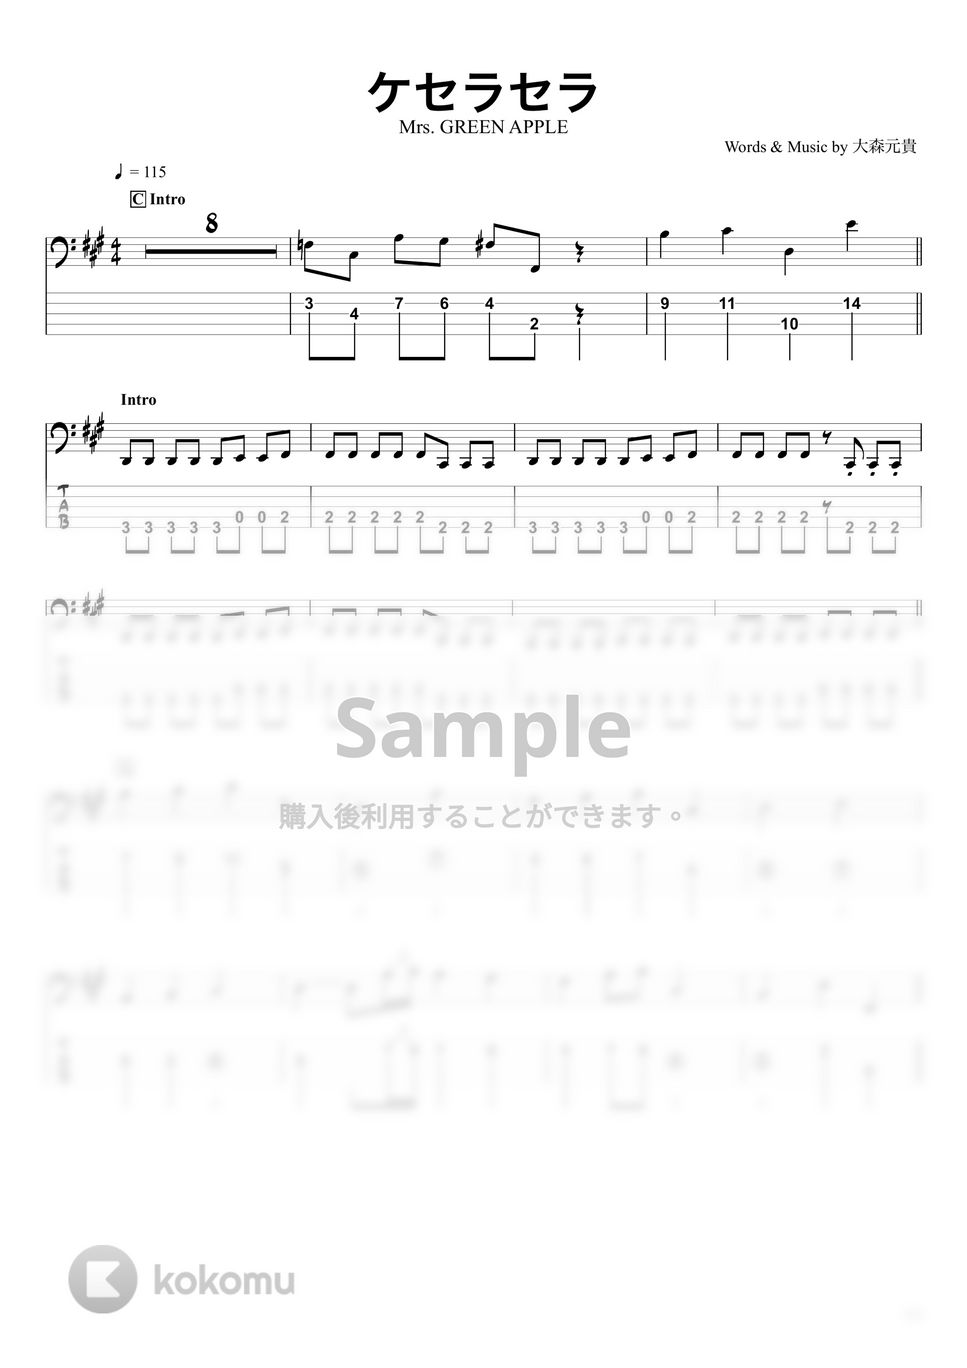 Mrs. GREEN APPLE - ケセラセラ (ベースTAB譜☆5弦ベース対応) by swbass